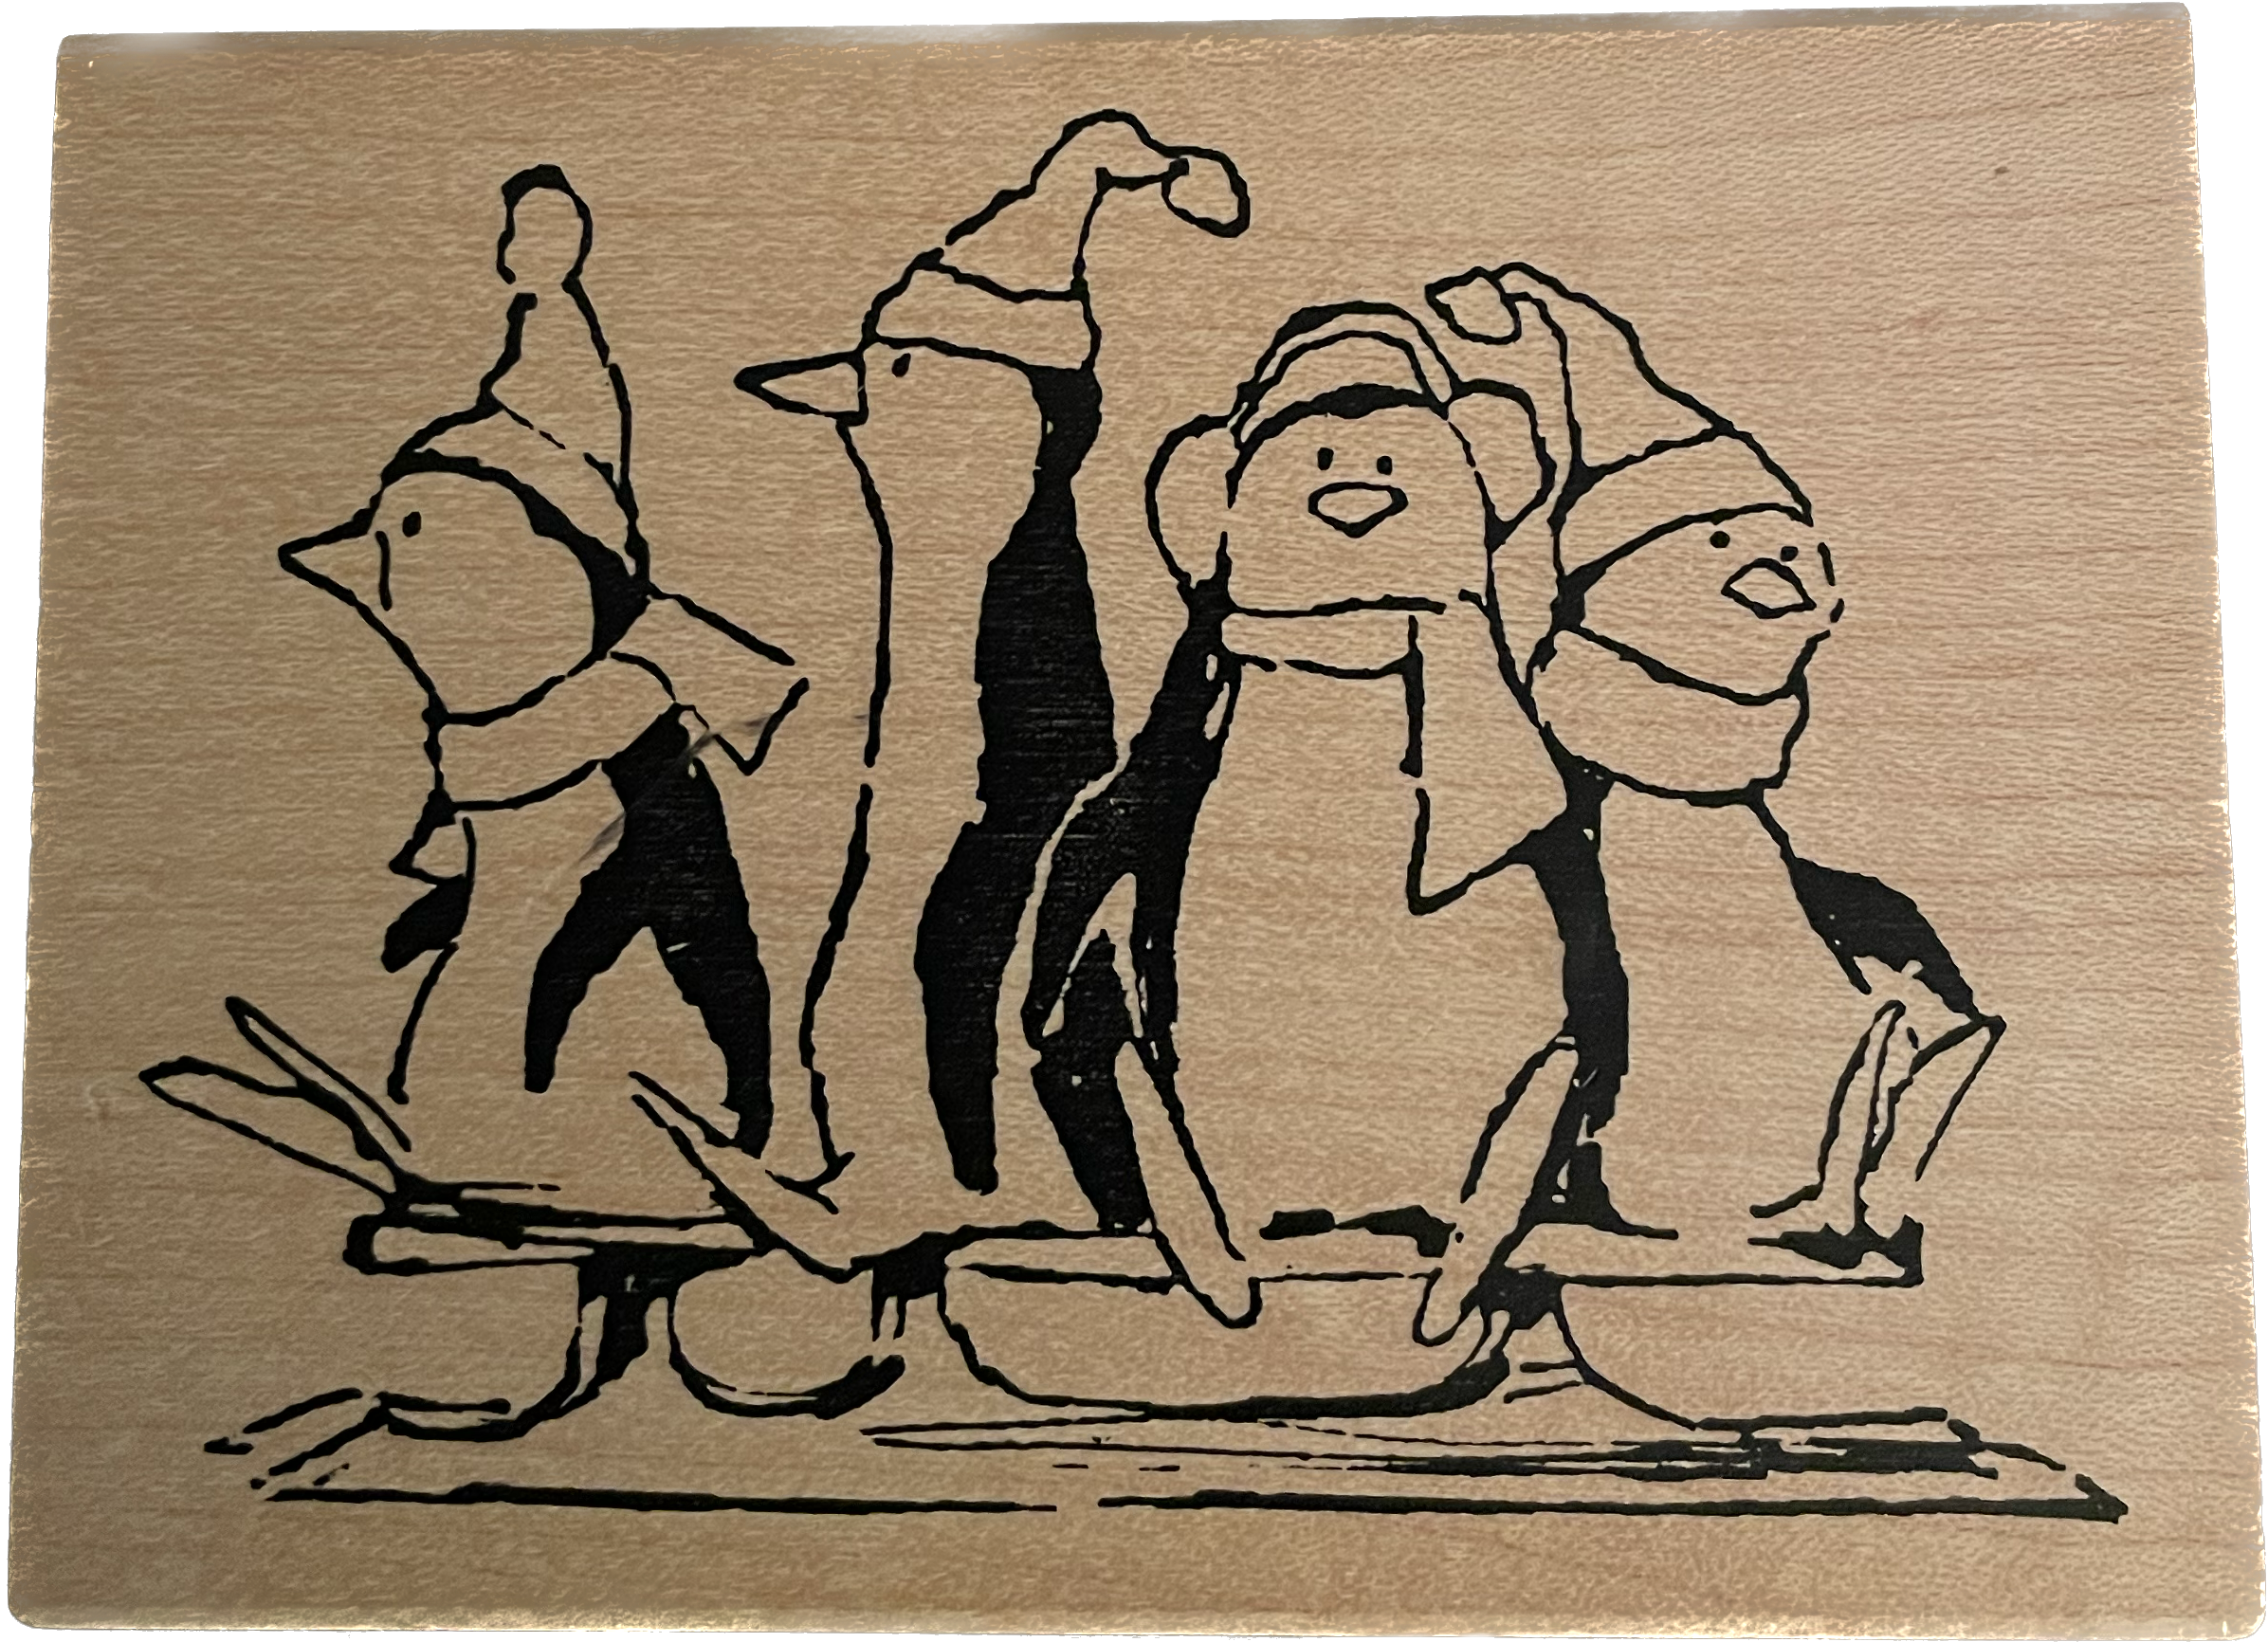 Art Impression - Sledding pinguins - wood mounted stamp